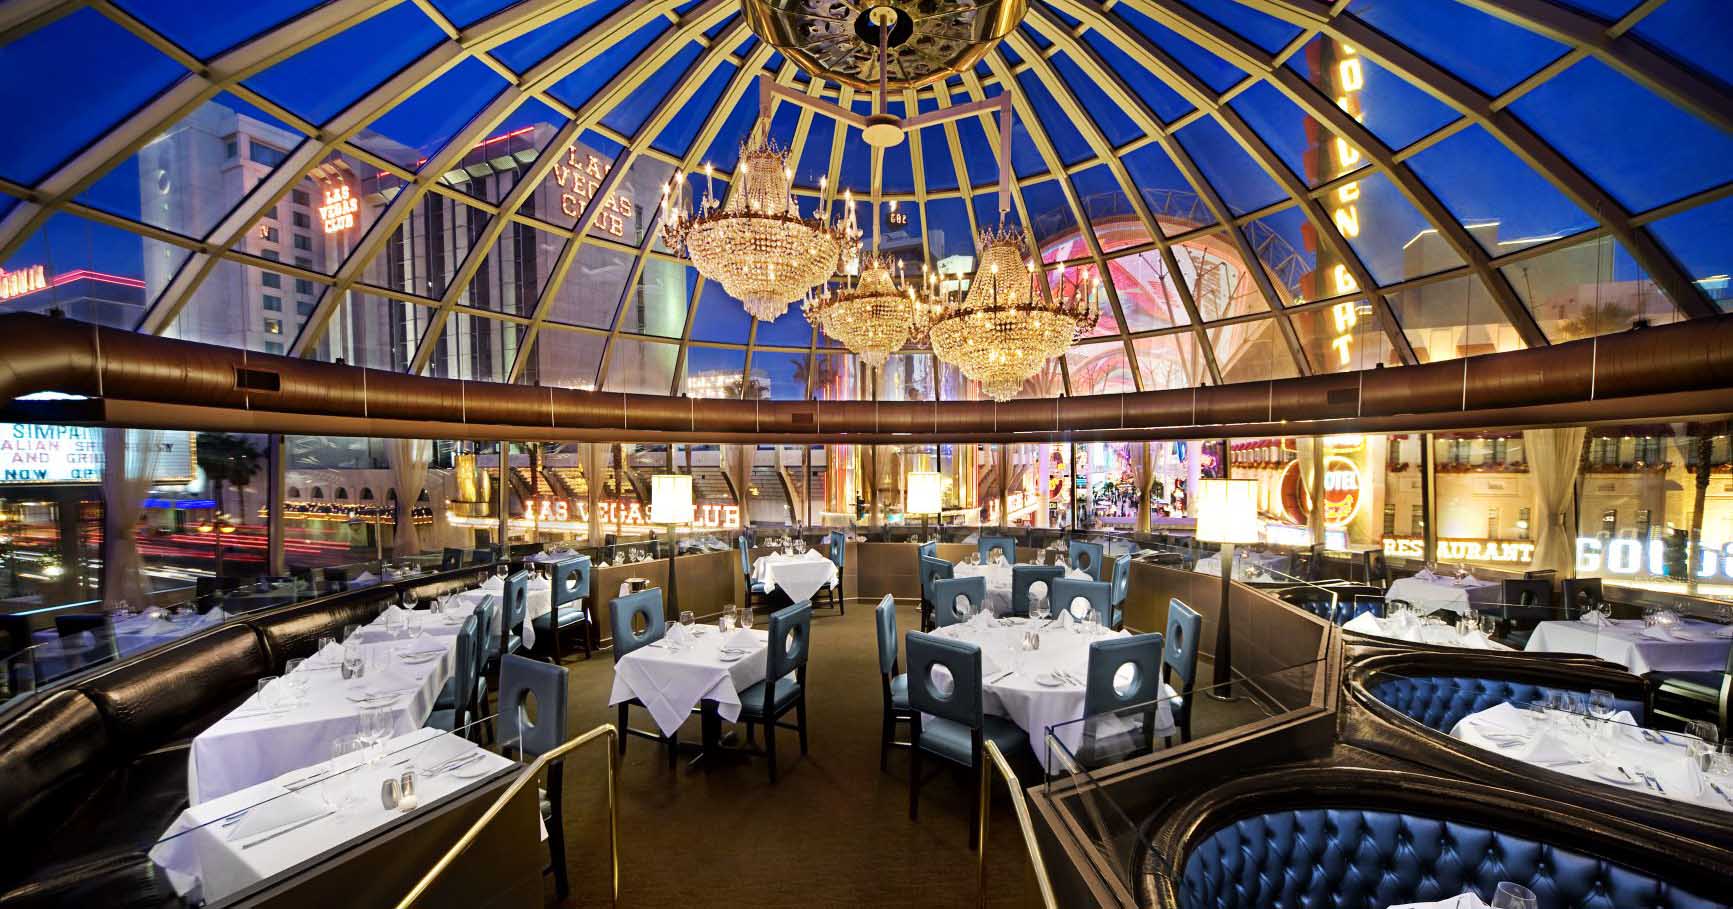 Oscars Steakhouse at Plaza - among best steak in Las Vegas